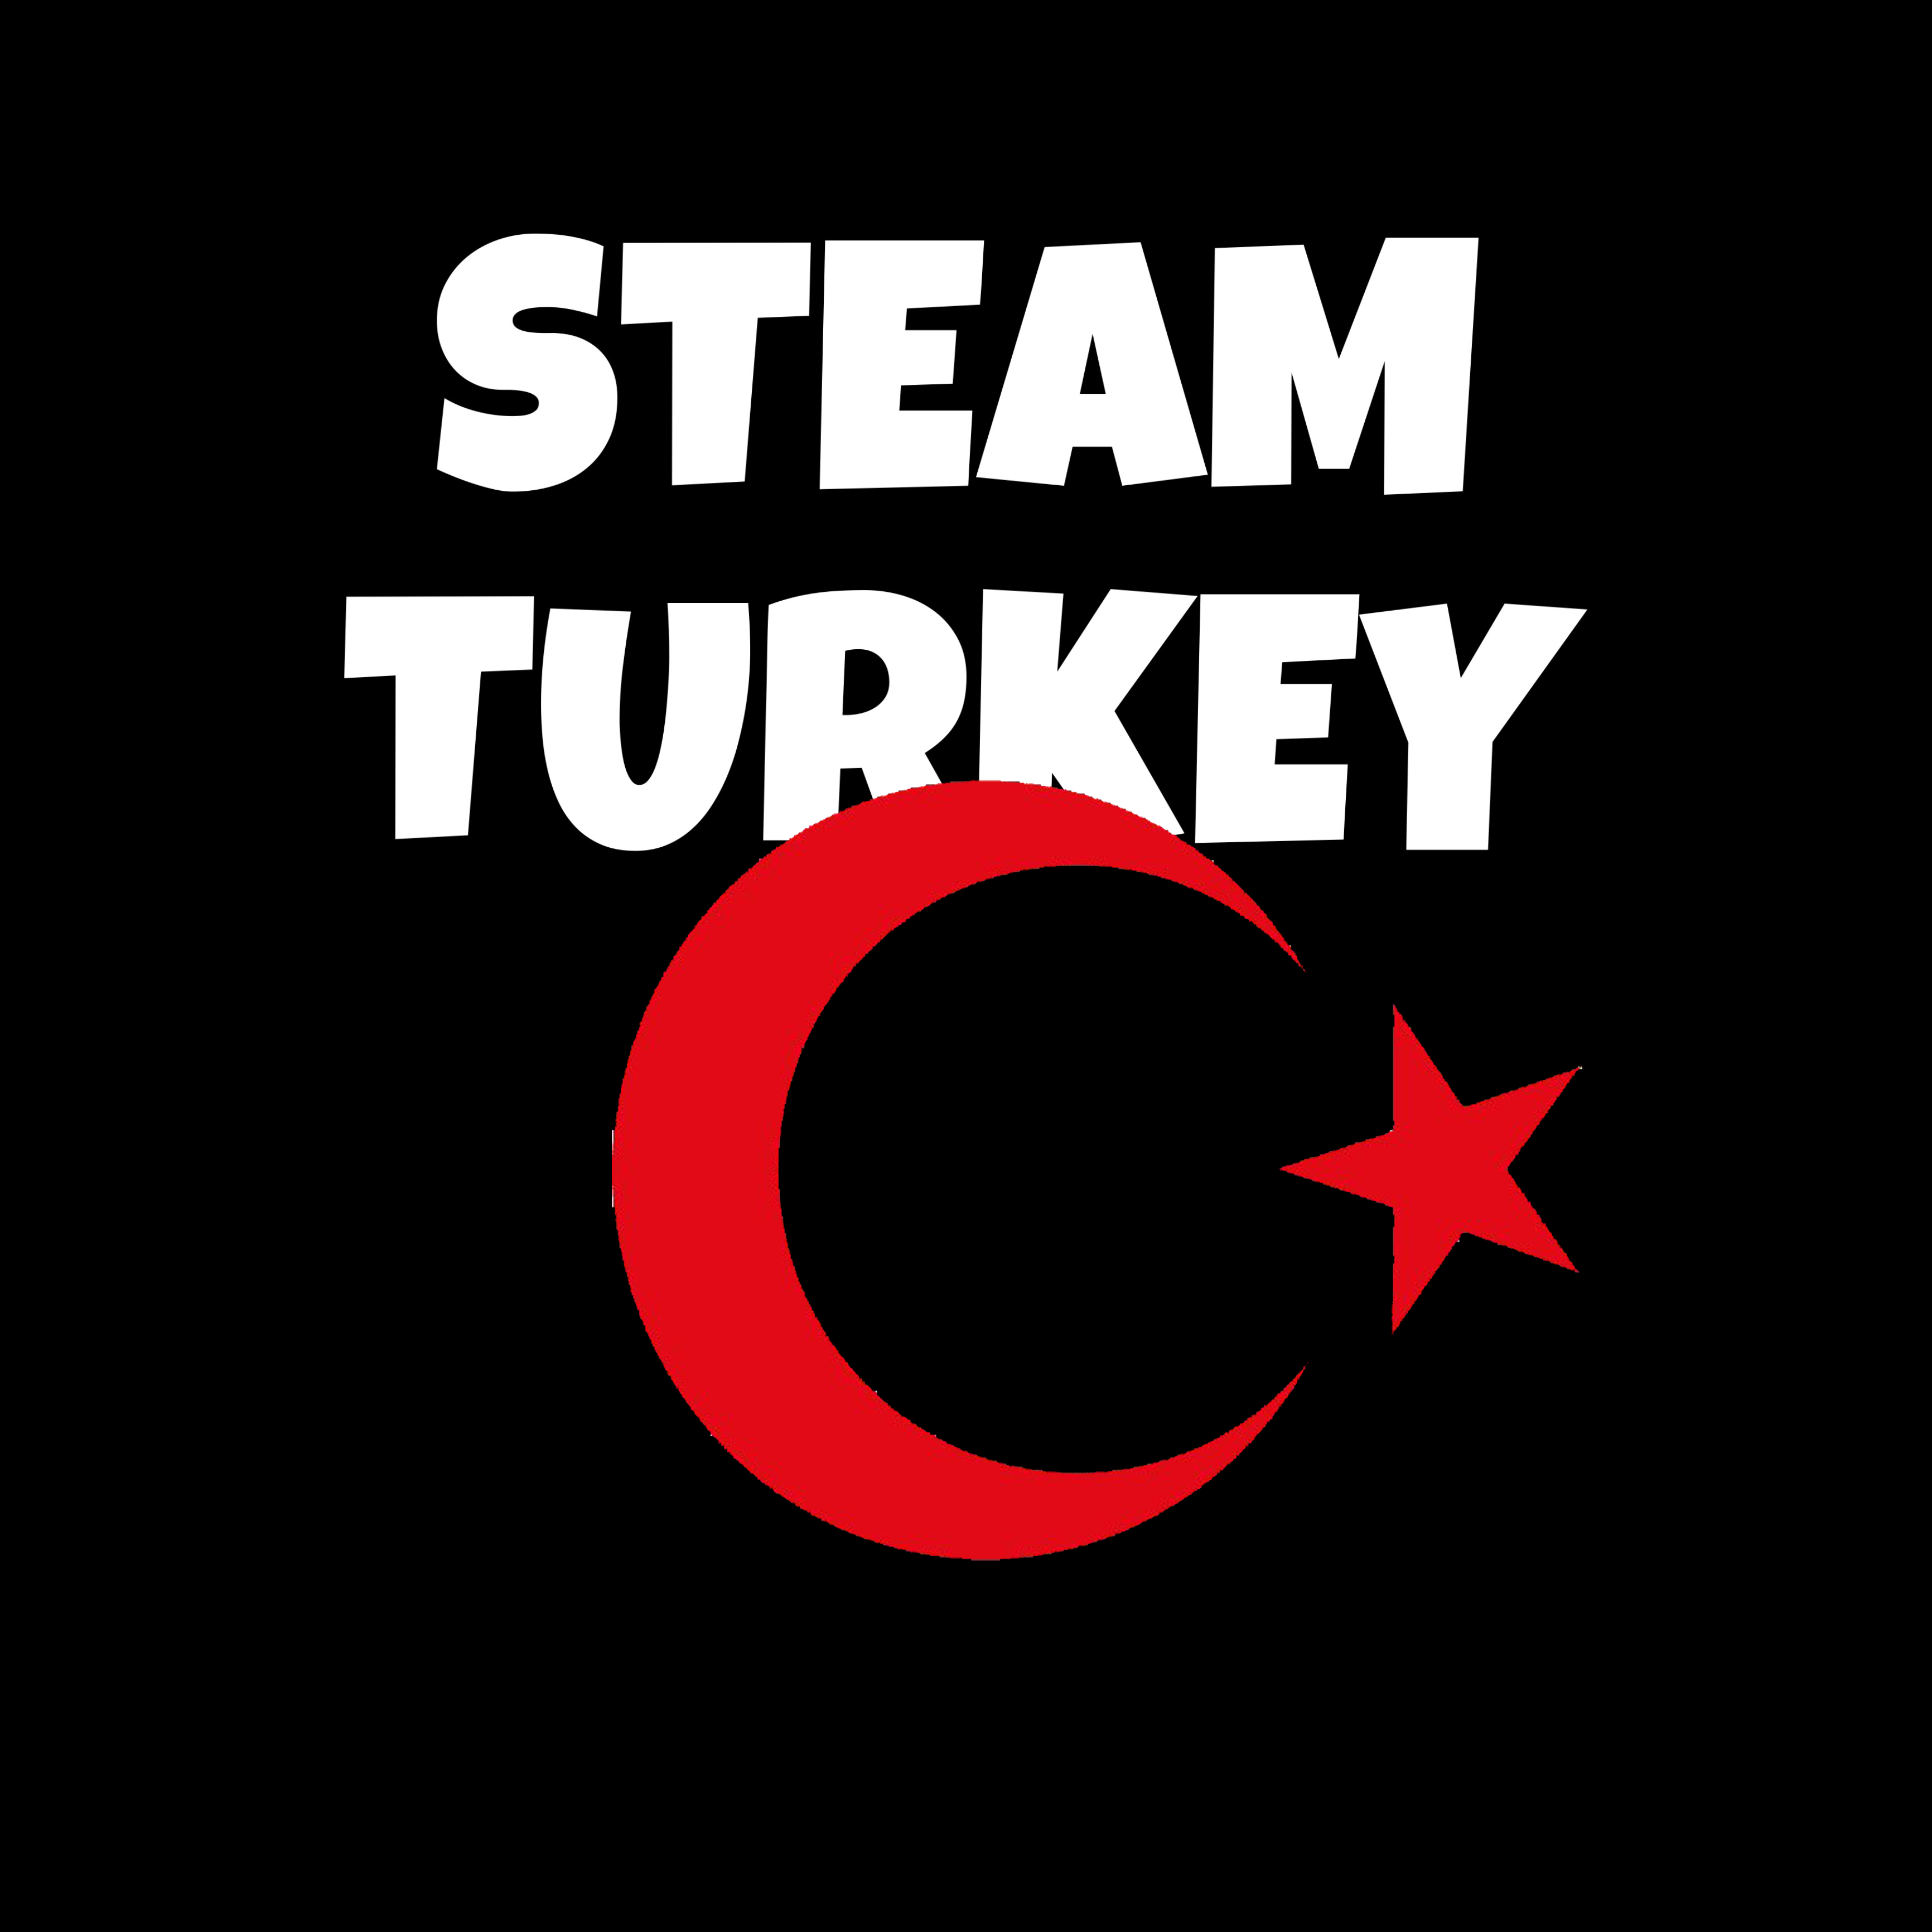 Турецкий стим игры. Турецкий стим. Турецкий аккаунт стим. Steam Gift Card Turkey. Турецкие цены в стиме.